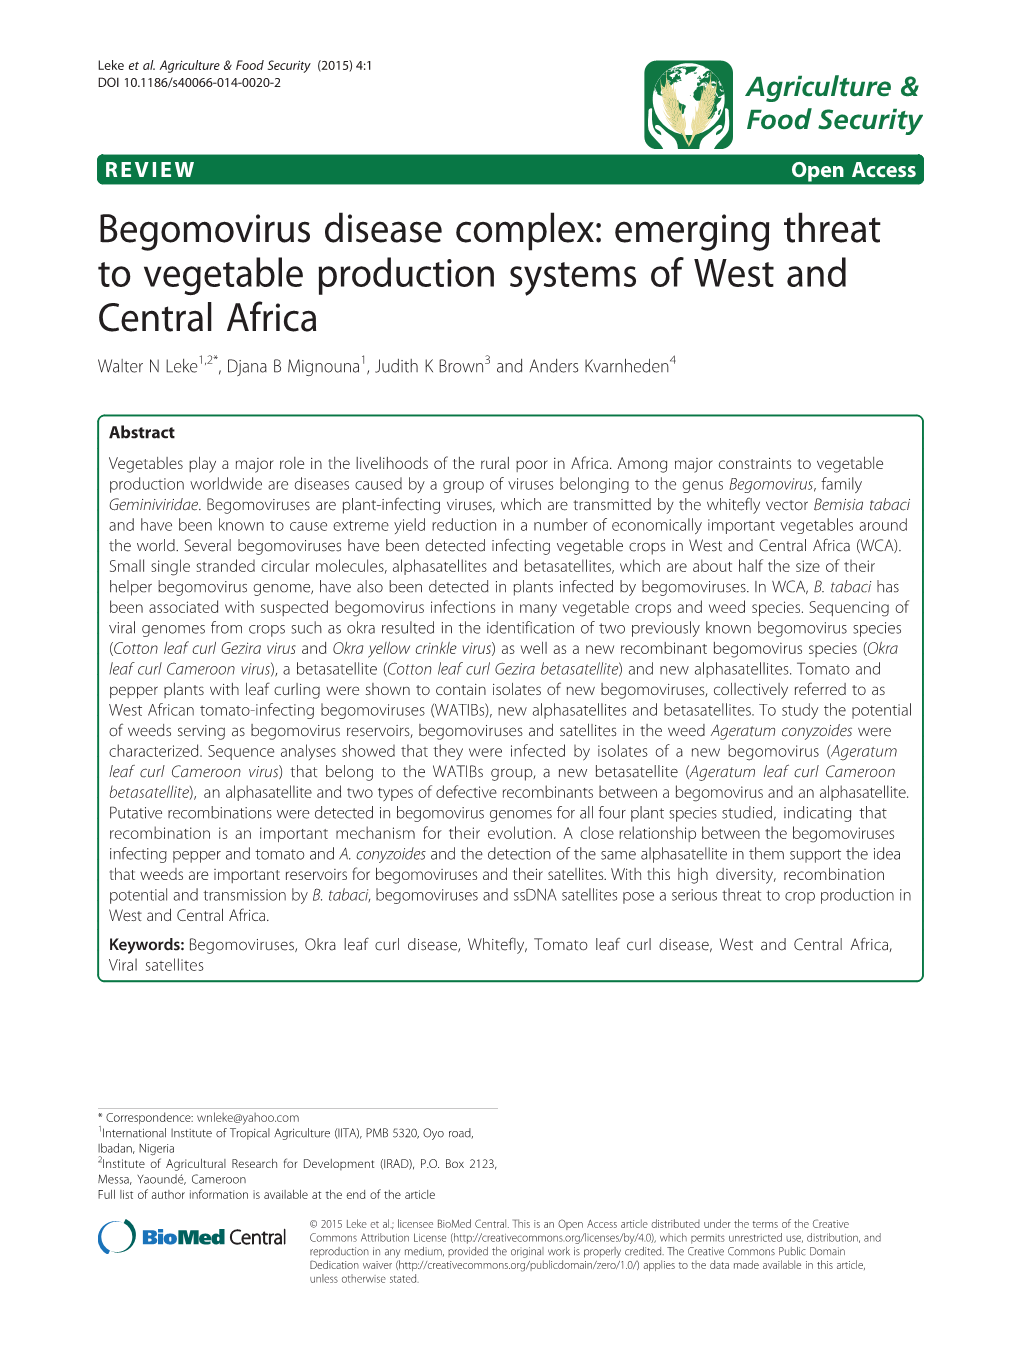 Begomovirus Disease Complex